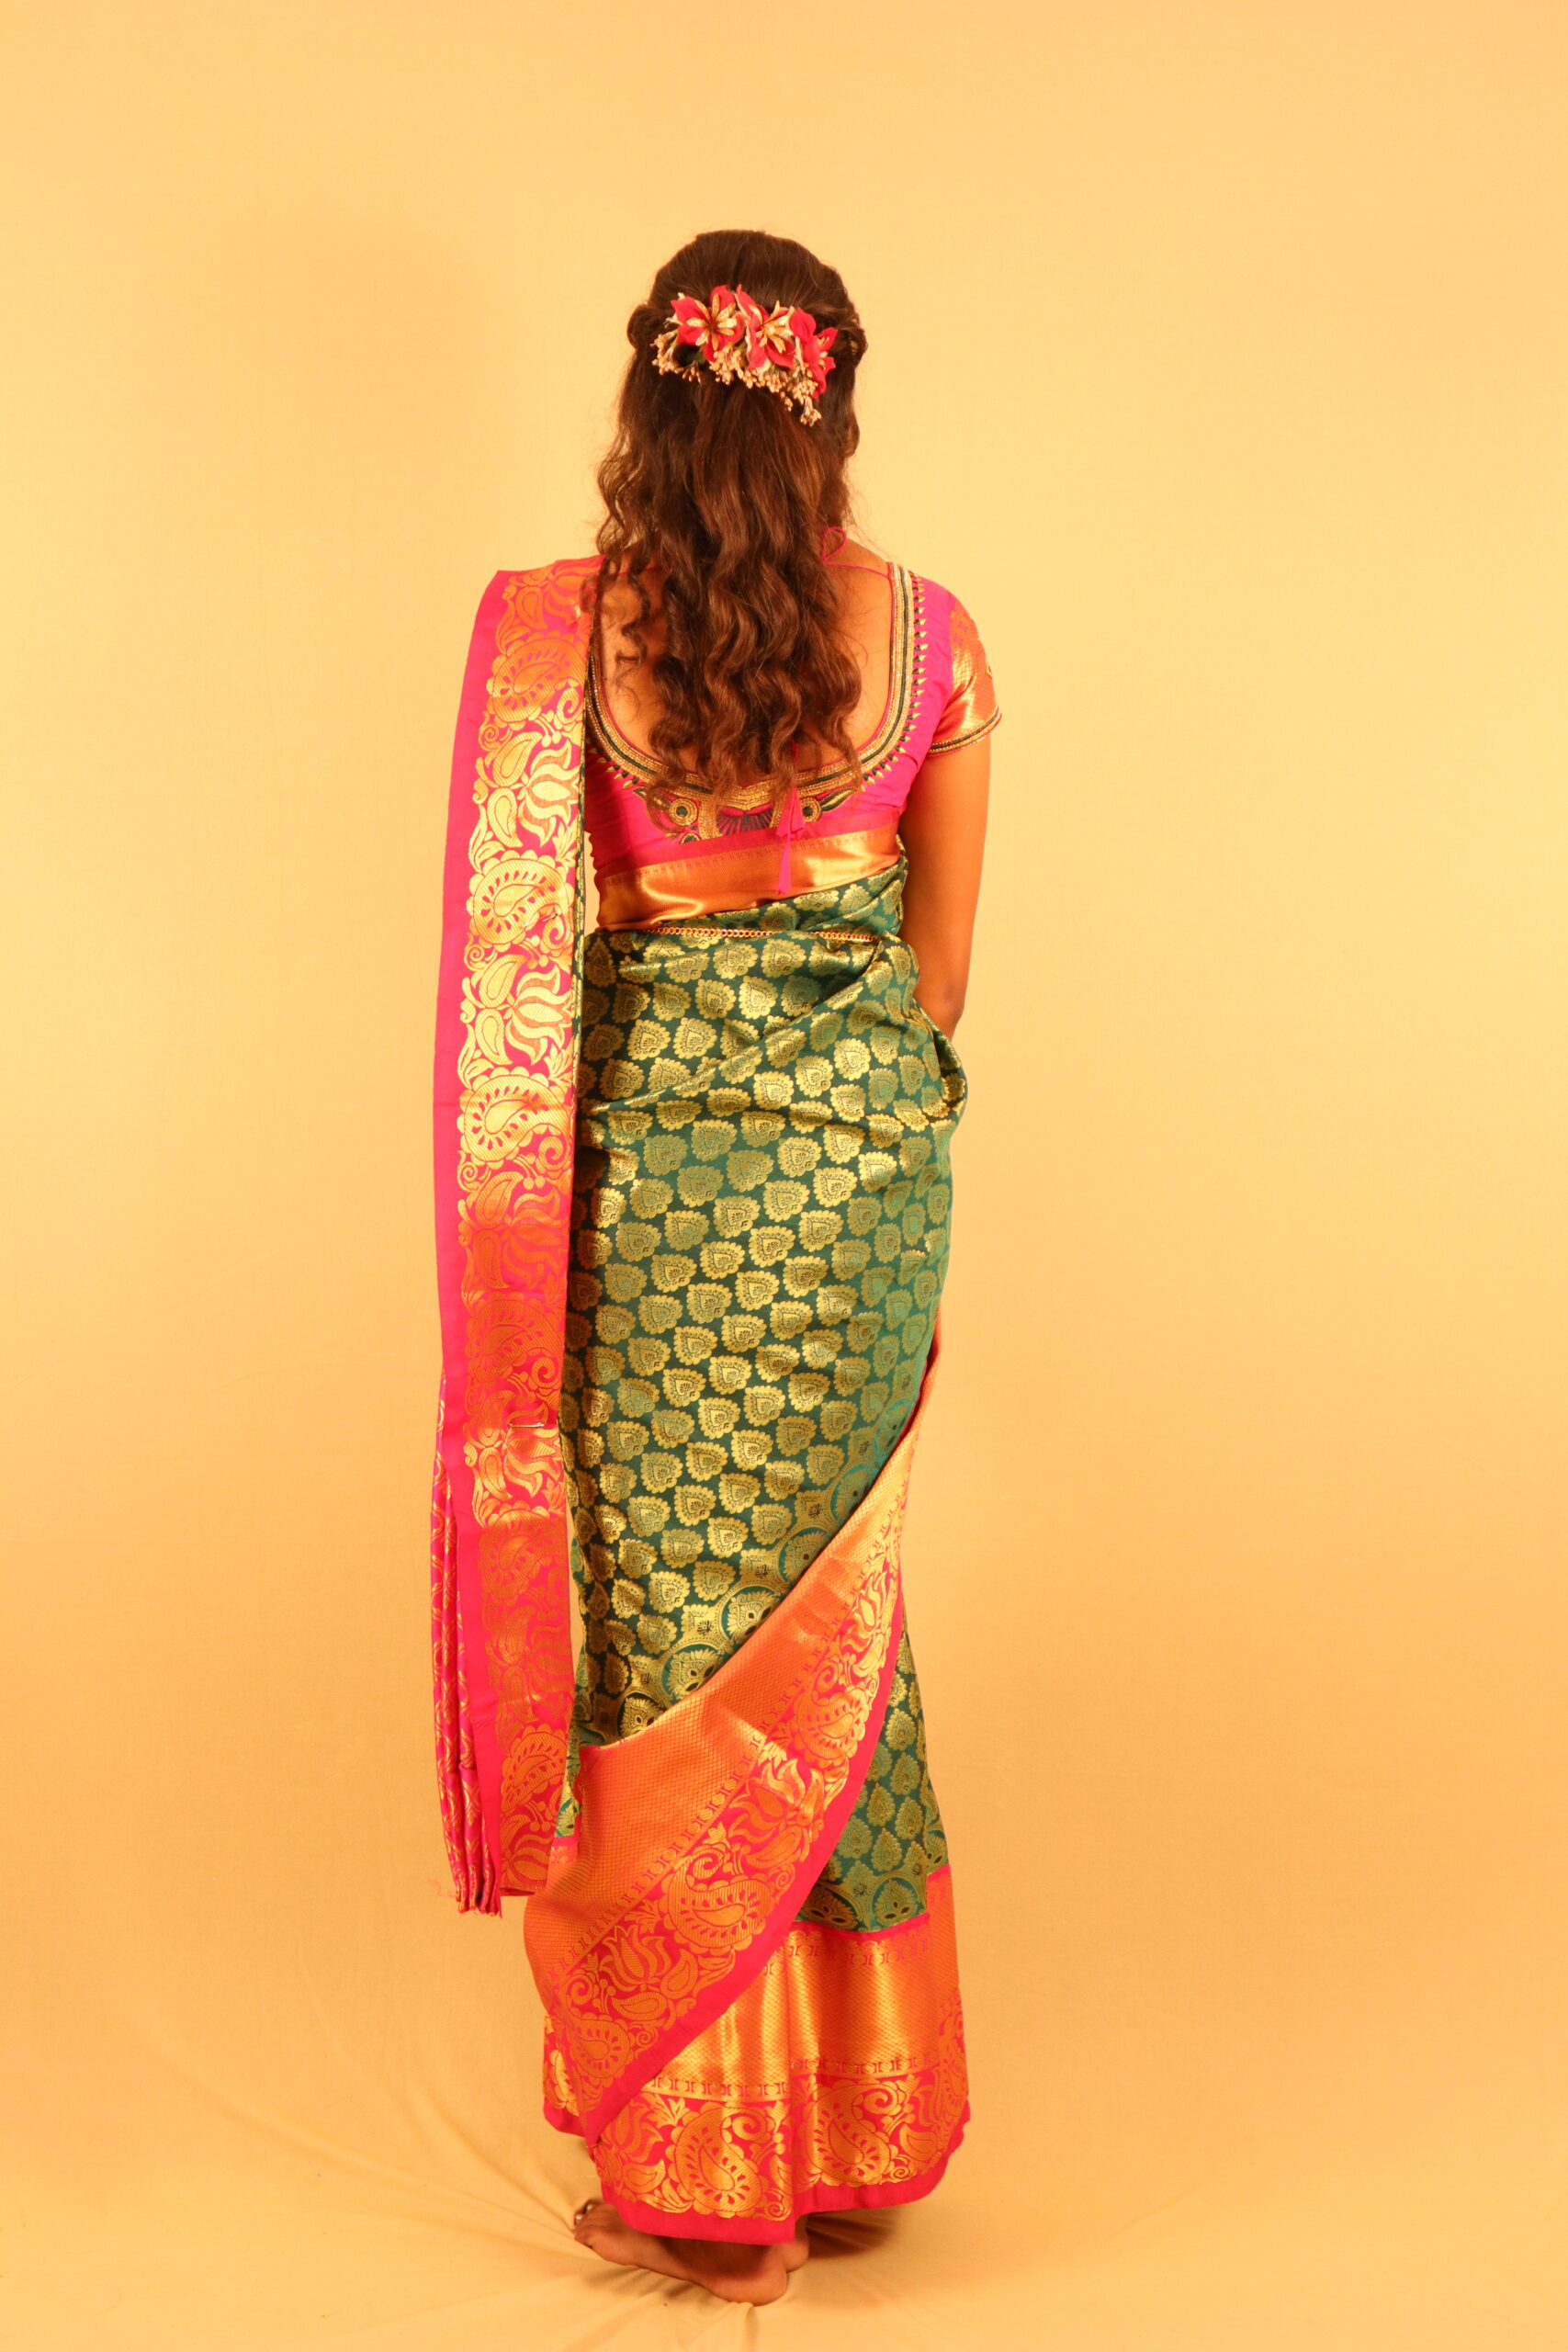 Handloom Saree Draping Style | How to Wear Silk Handloom Saree | Handloom  Saree Wearing Tutorial - YouTube